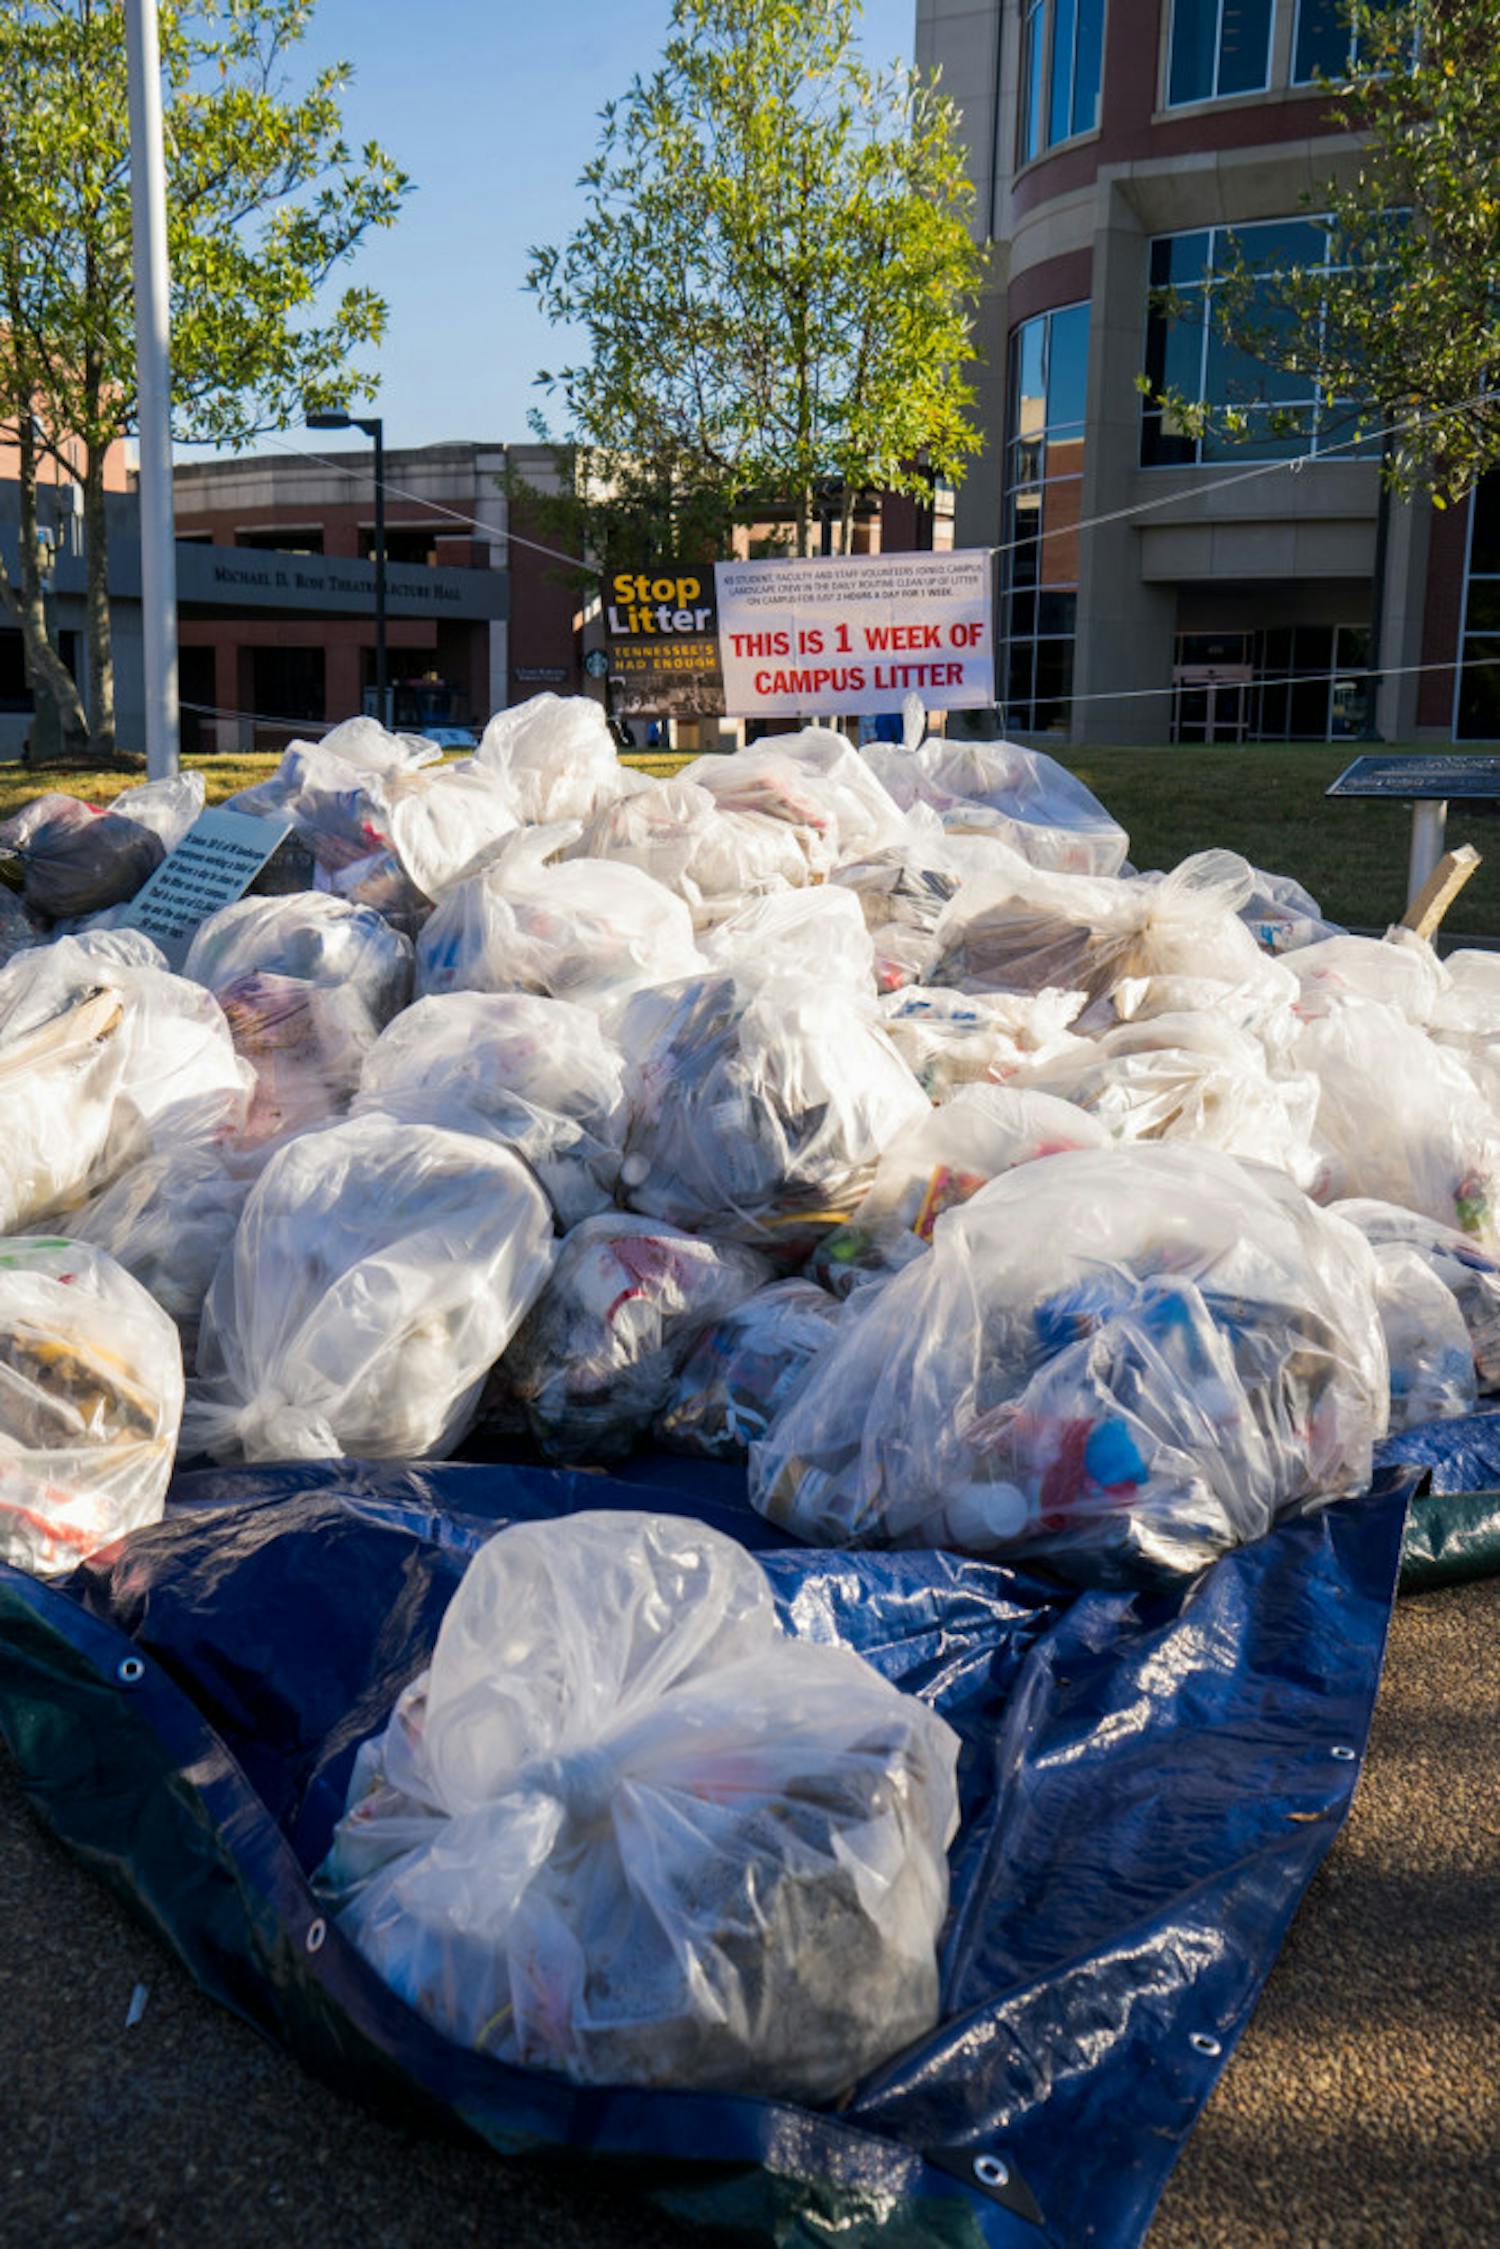 Bags of Trash shows one week of liter